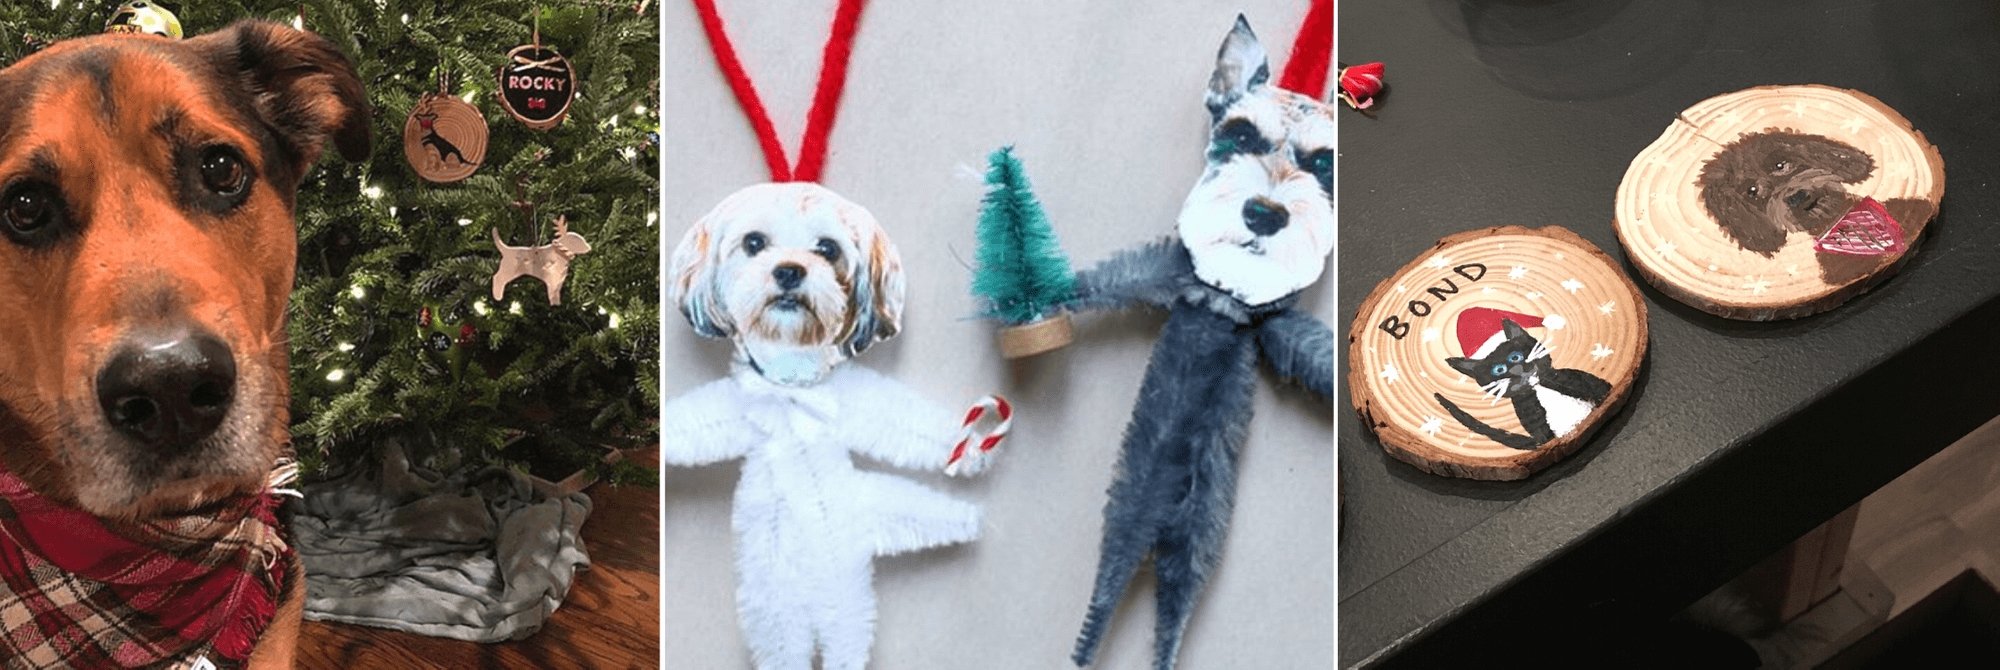 DIY Ornaments for the Dogs - Dec. 13 - indigo & violet studio LLC